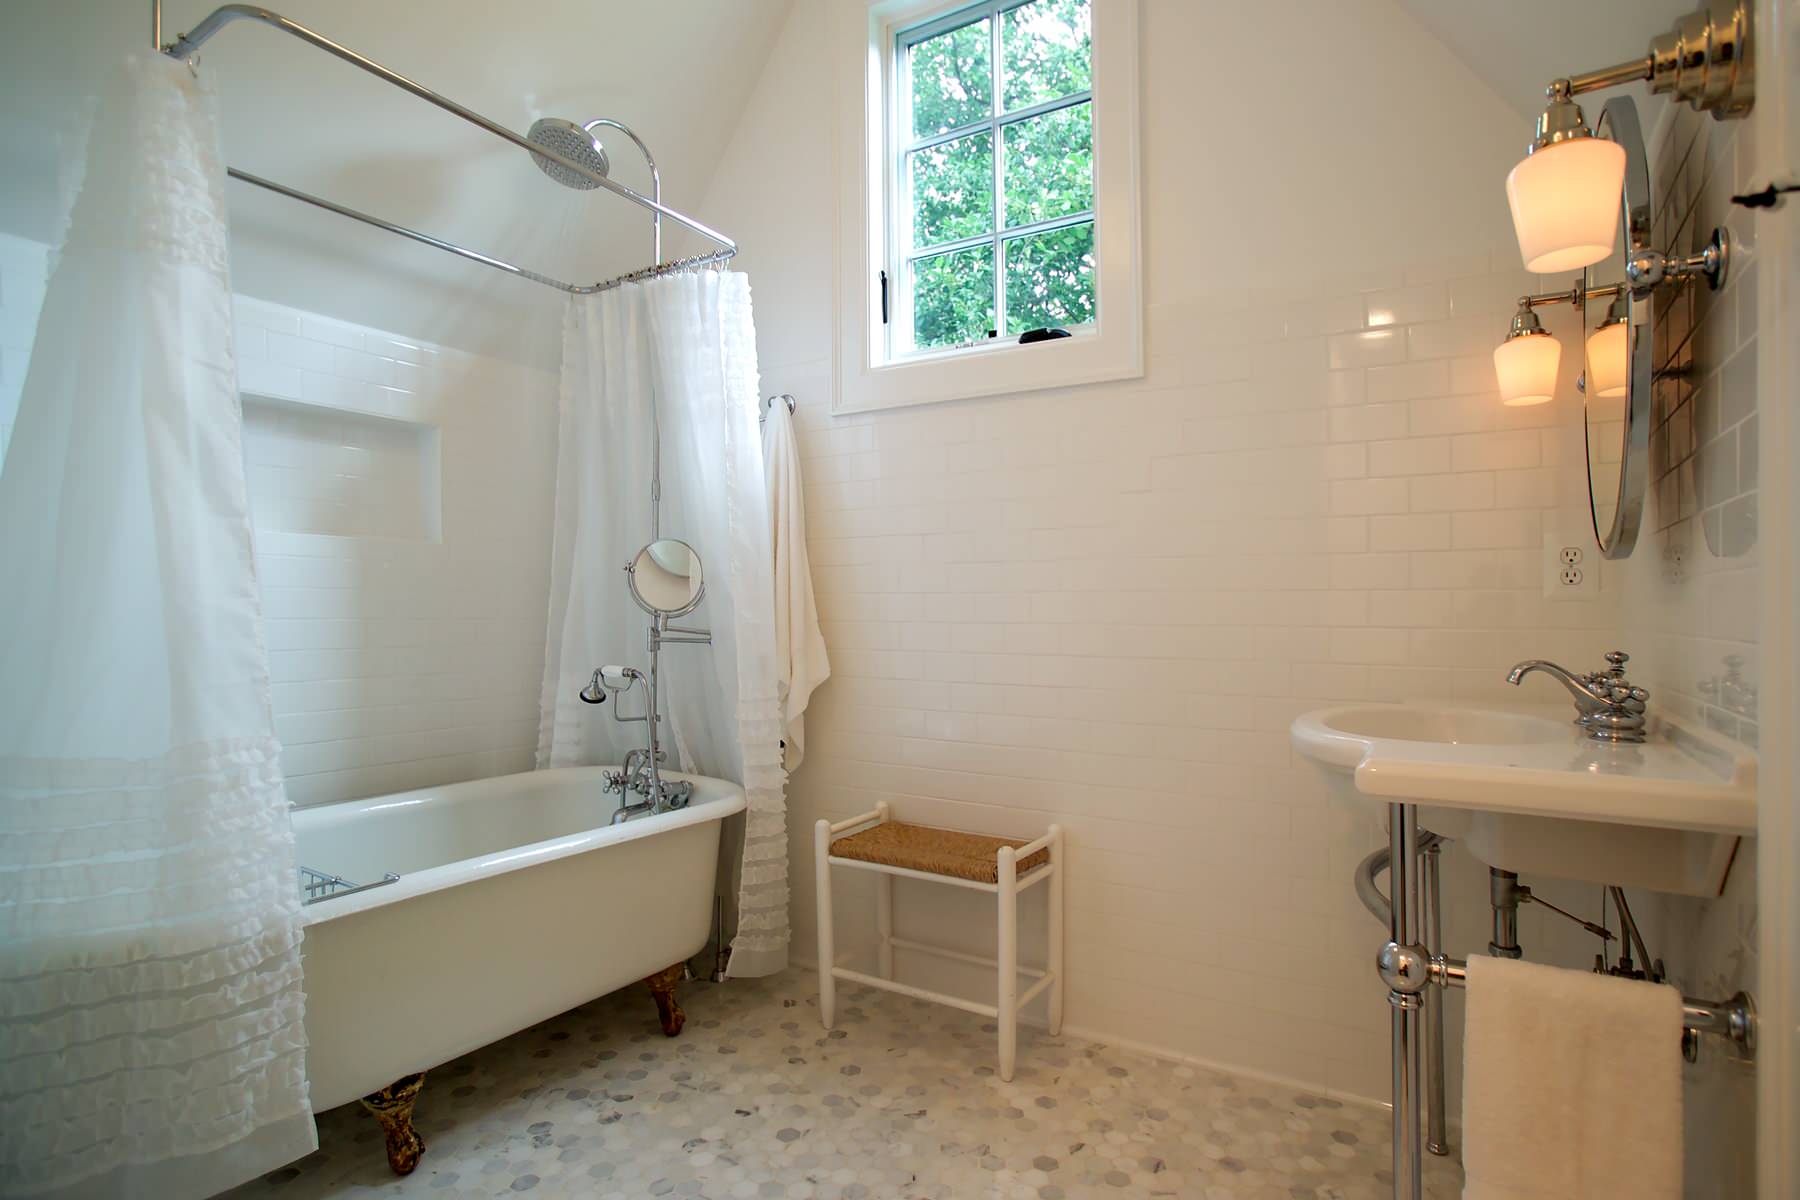 clawfoot tub shower curtain